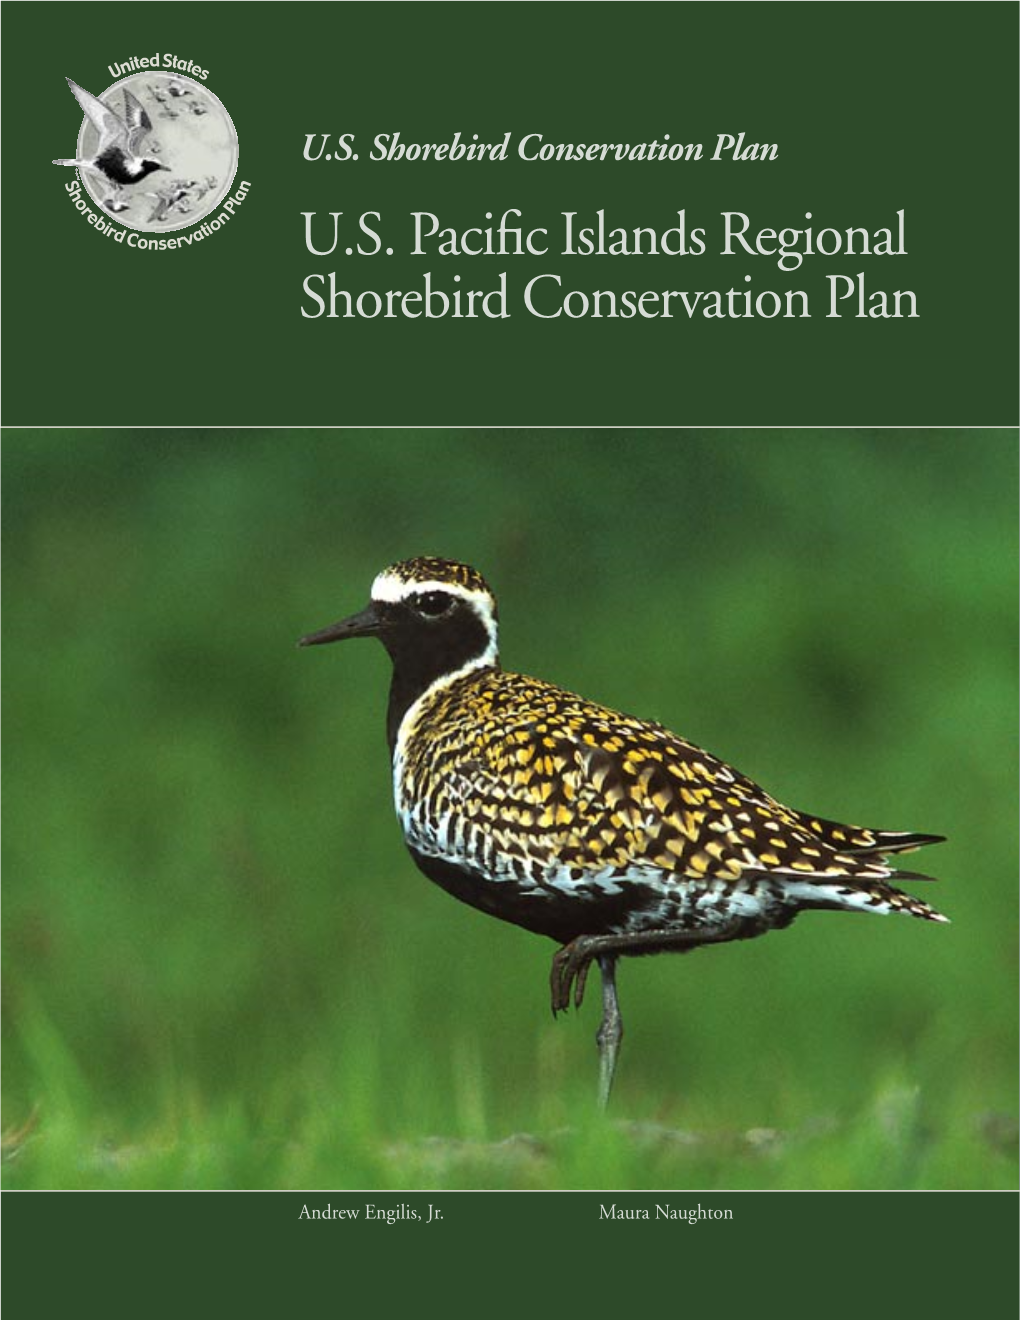 U.S. Pacific Island Regional Shorebird Conservation Plan